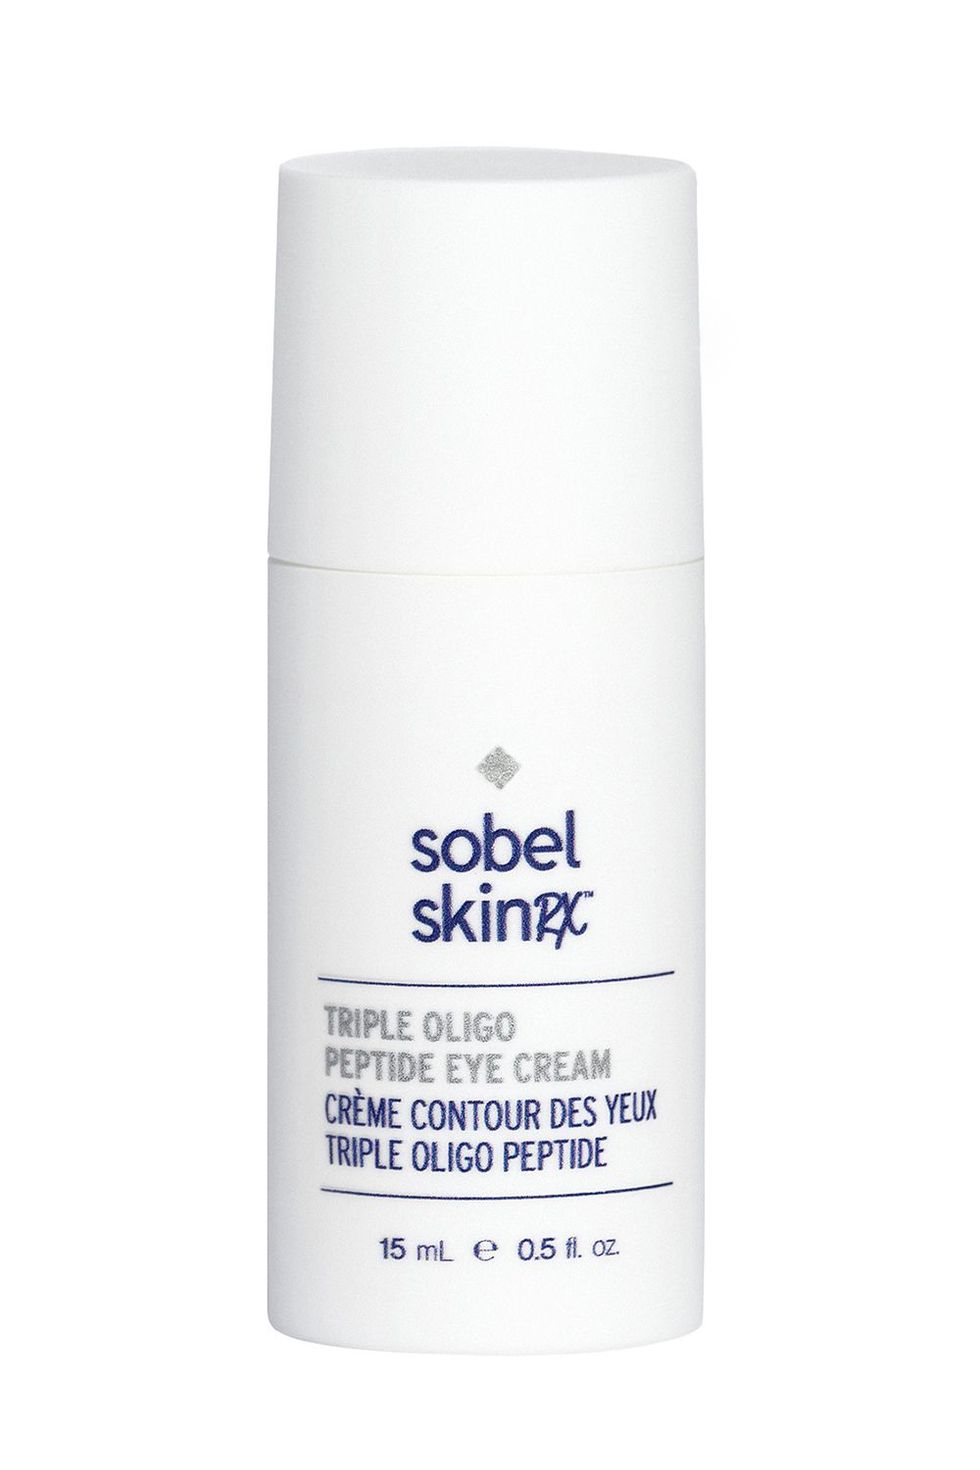 Sobel Skin Rx Oligo Peptide Eye Cream